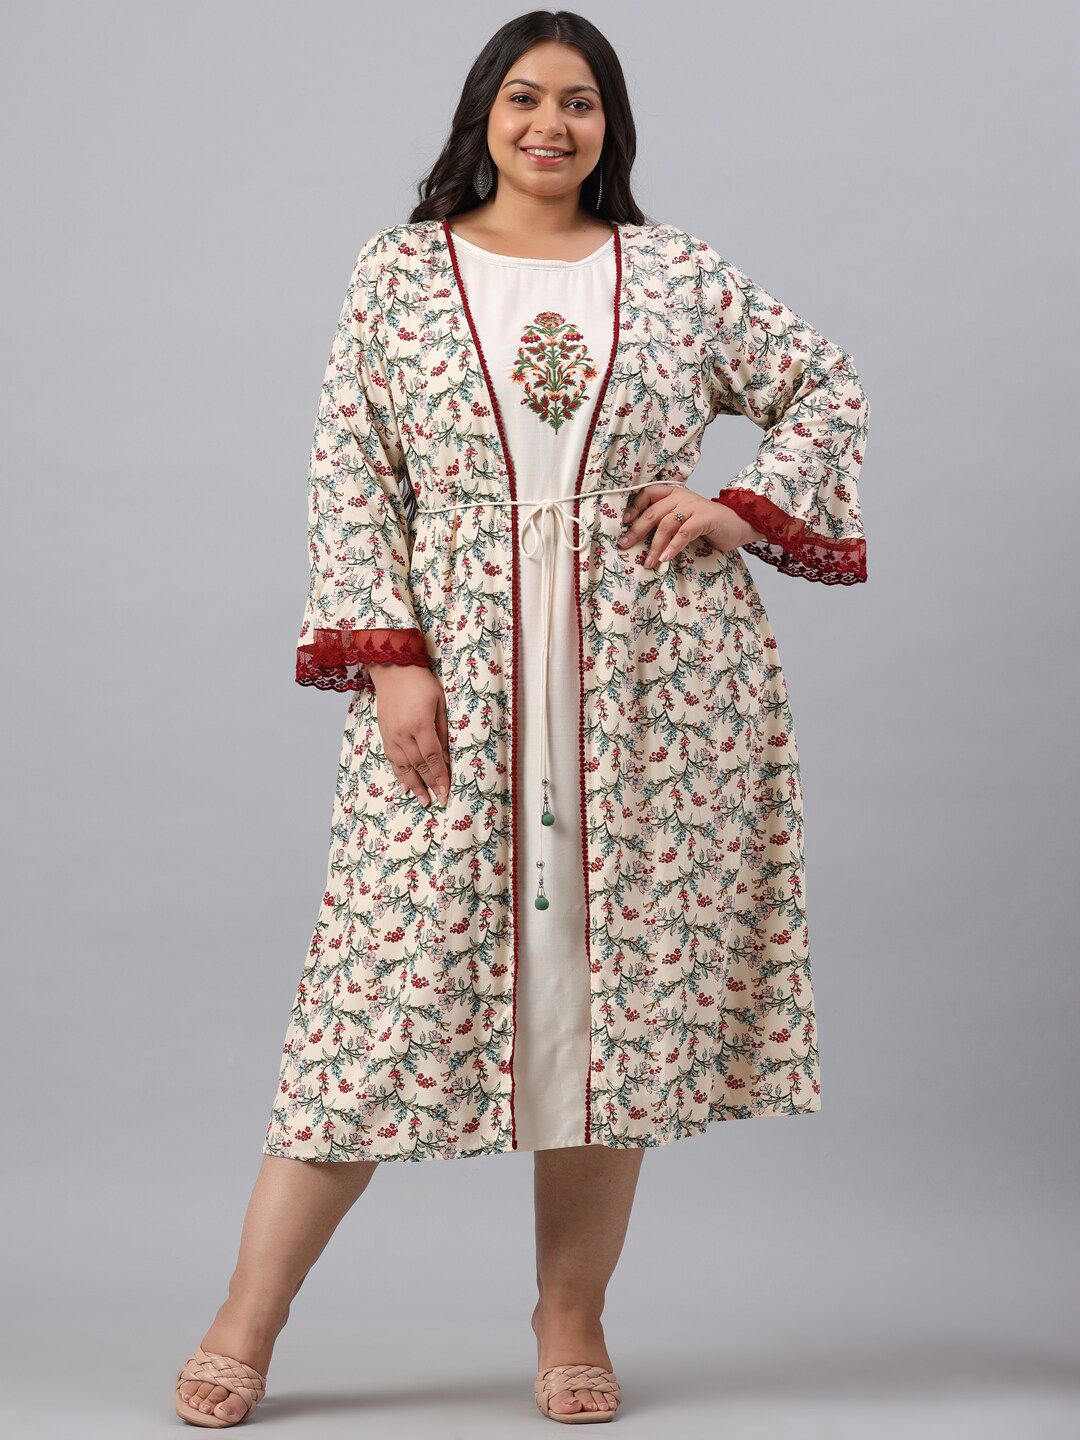 Juniper Off White & Maroon Floral Ethnic A-Line Midi Dress Price in India